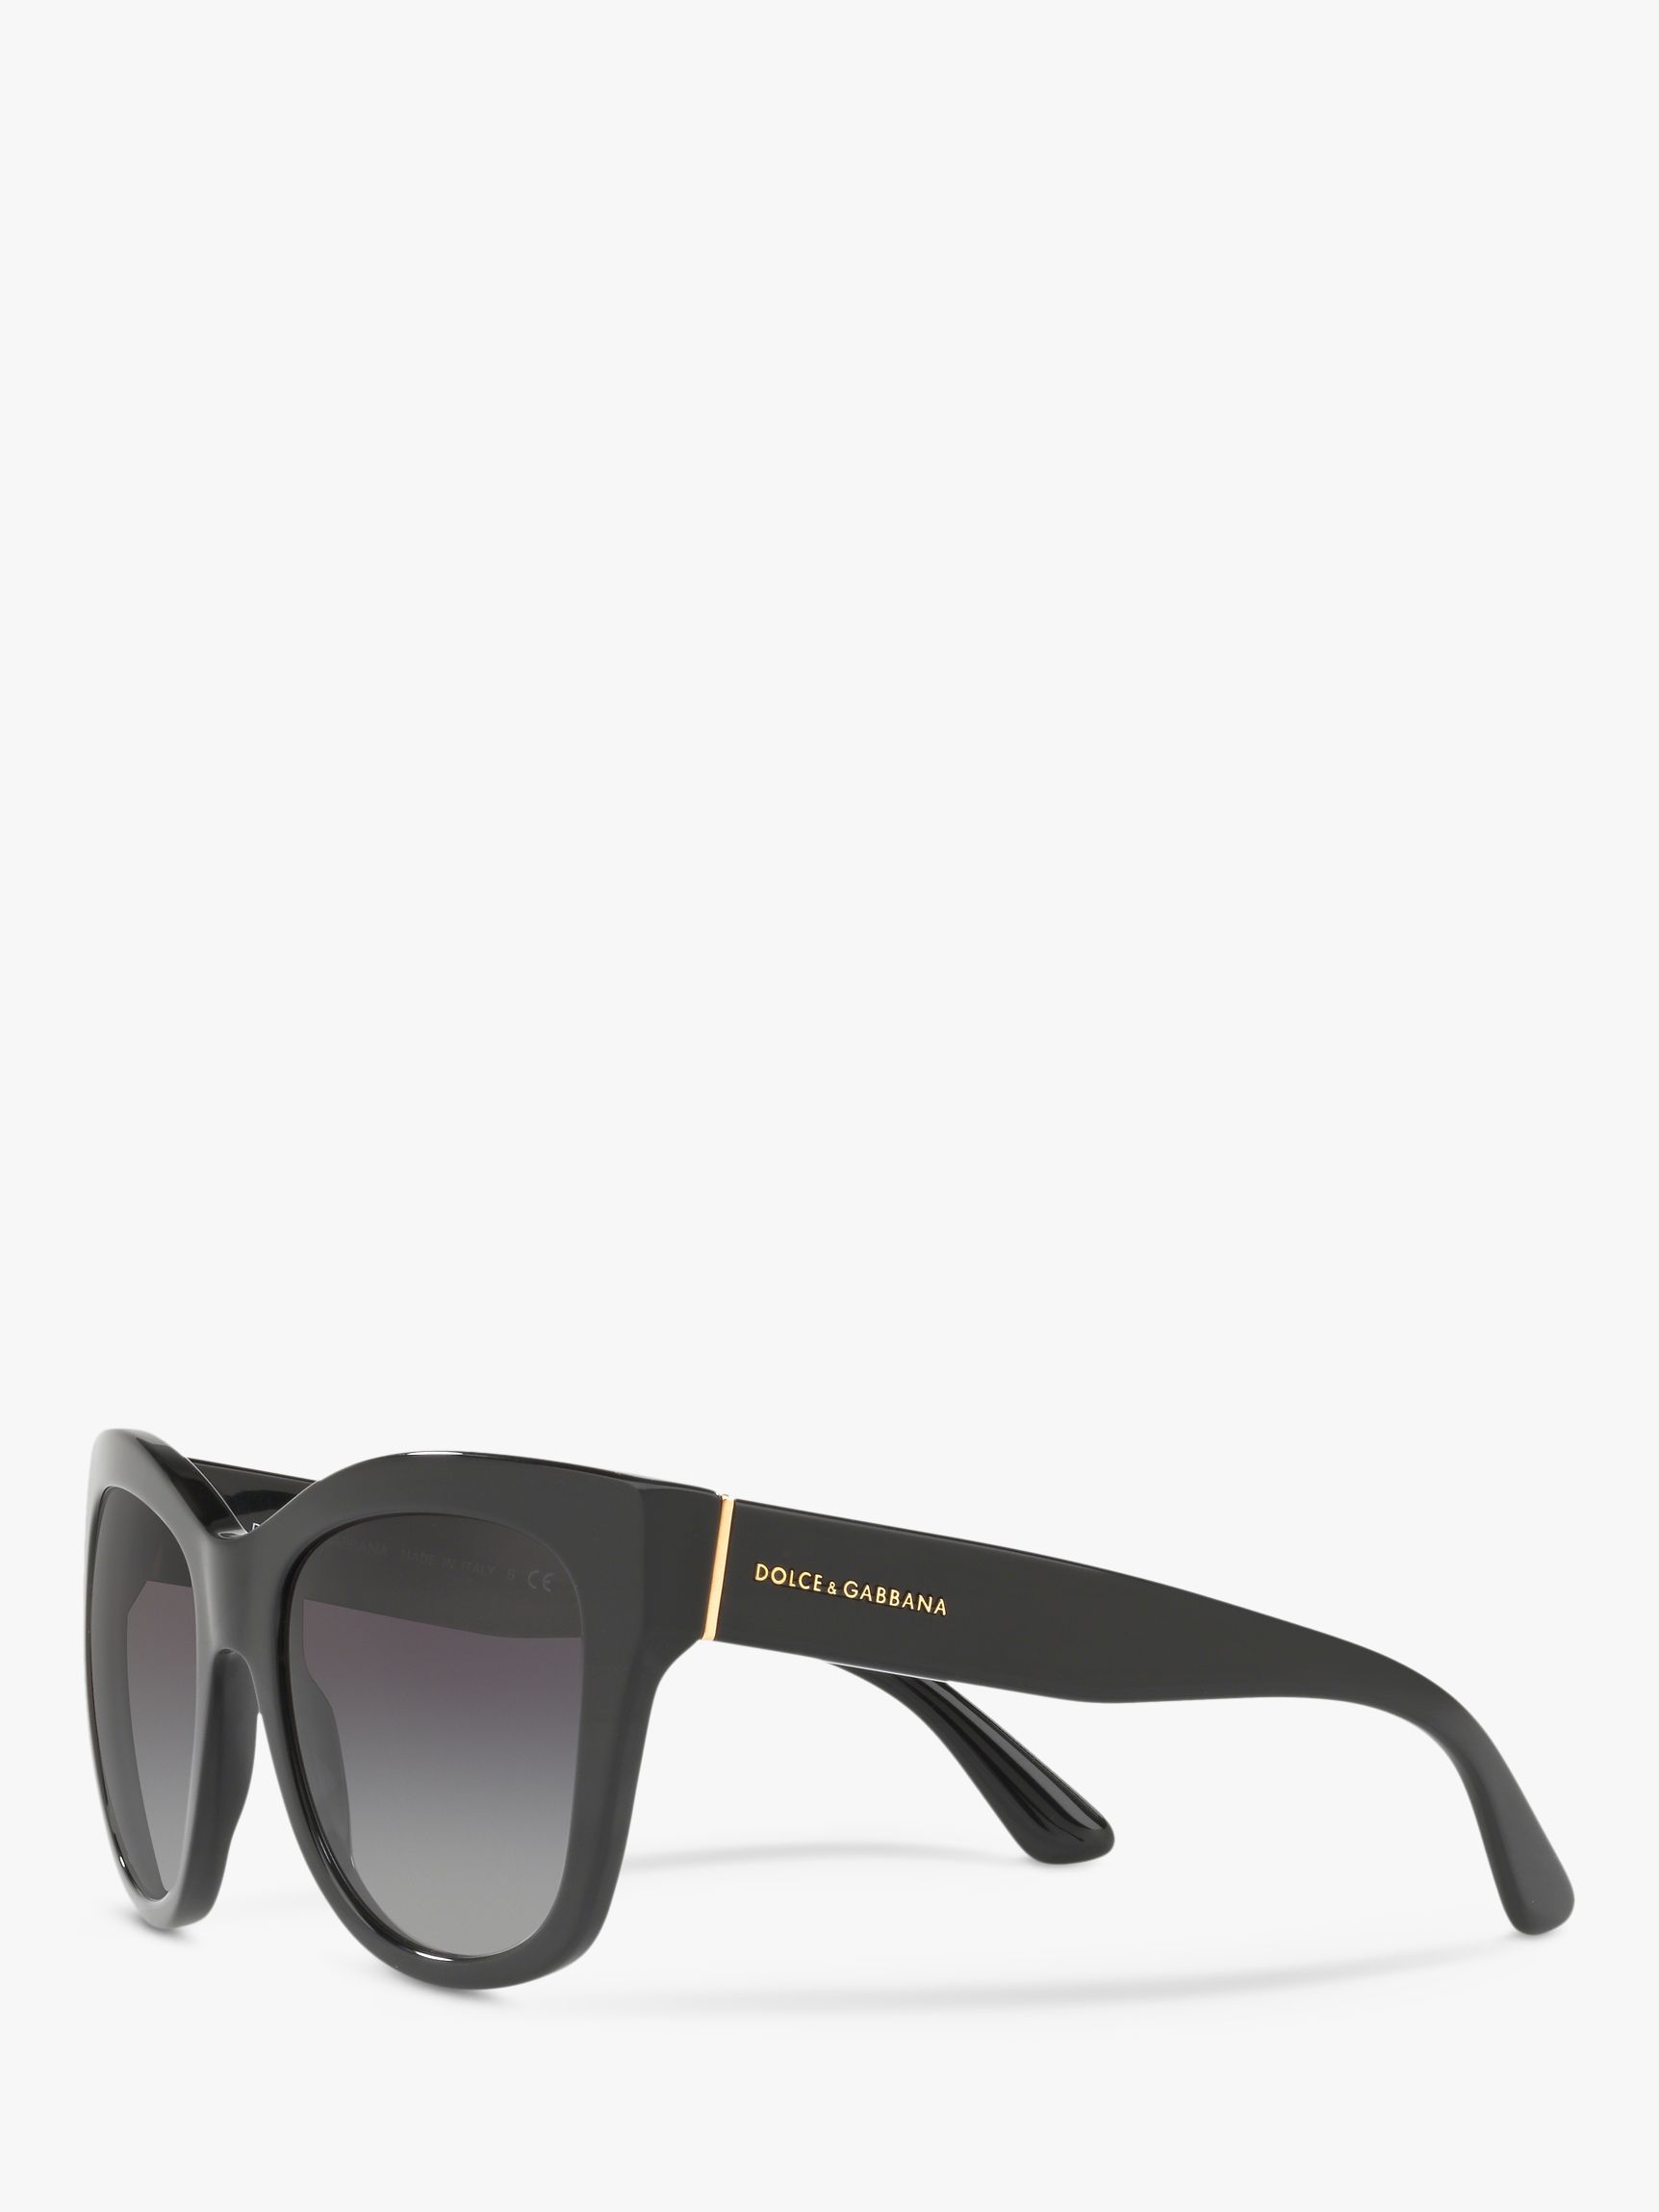 Online blackgrey womens gradient gabbana dolce sunglasses  dg4270 square dryer australia prague